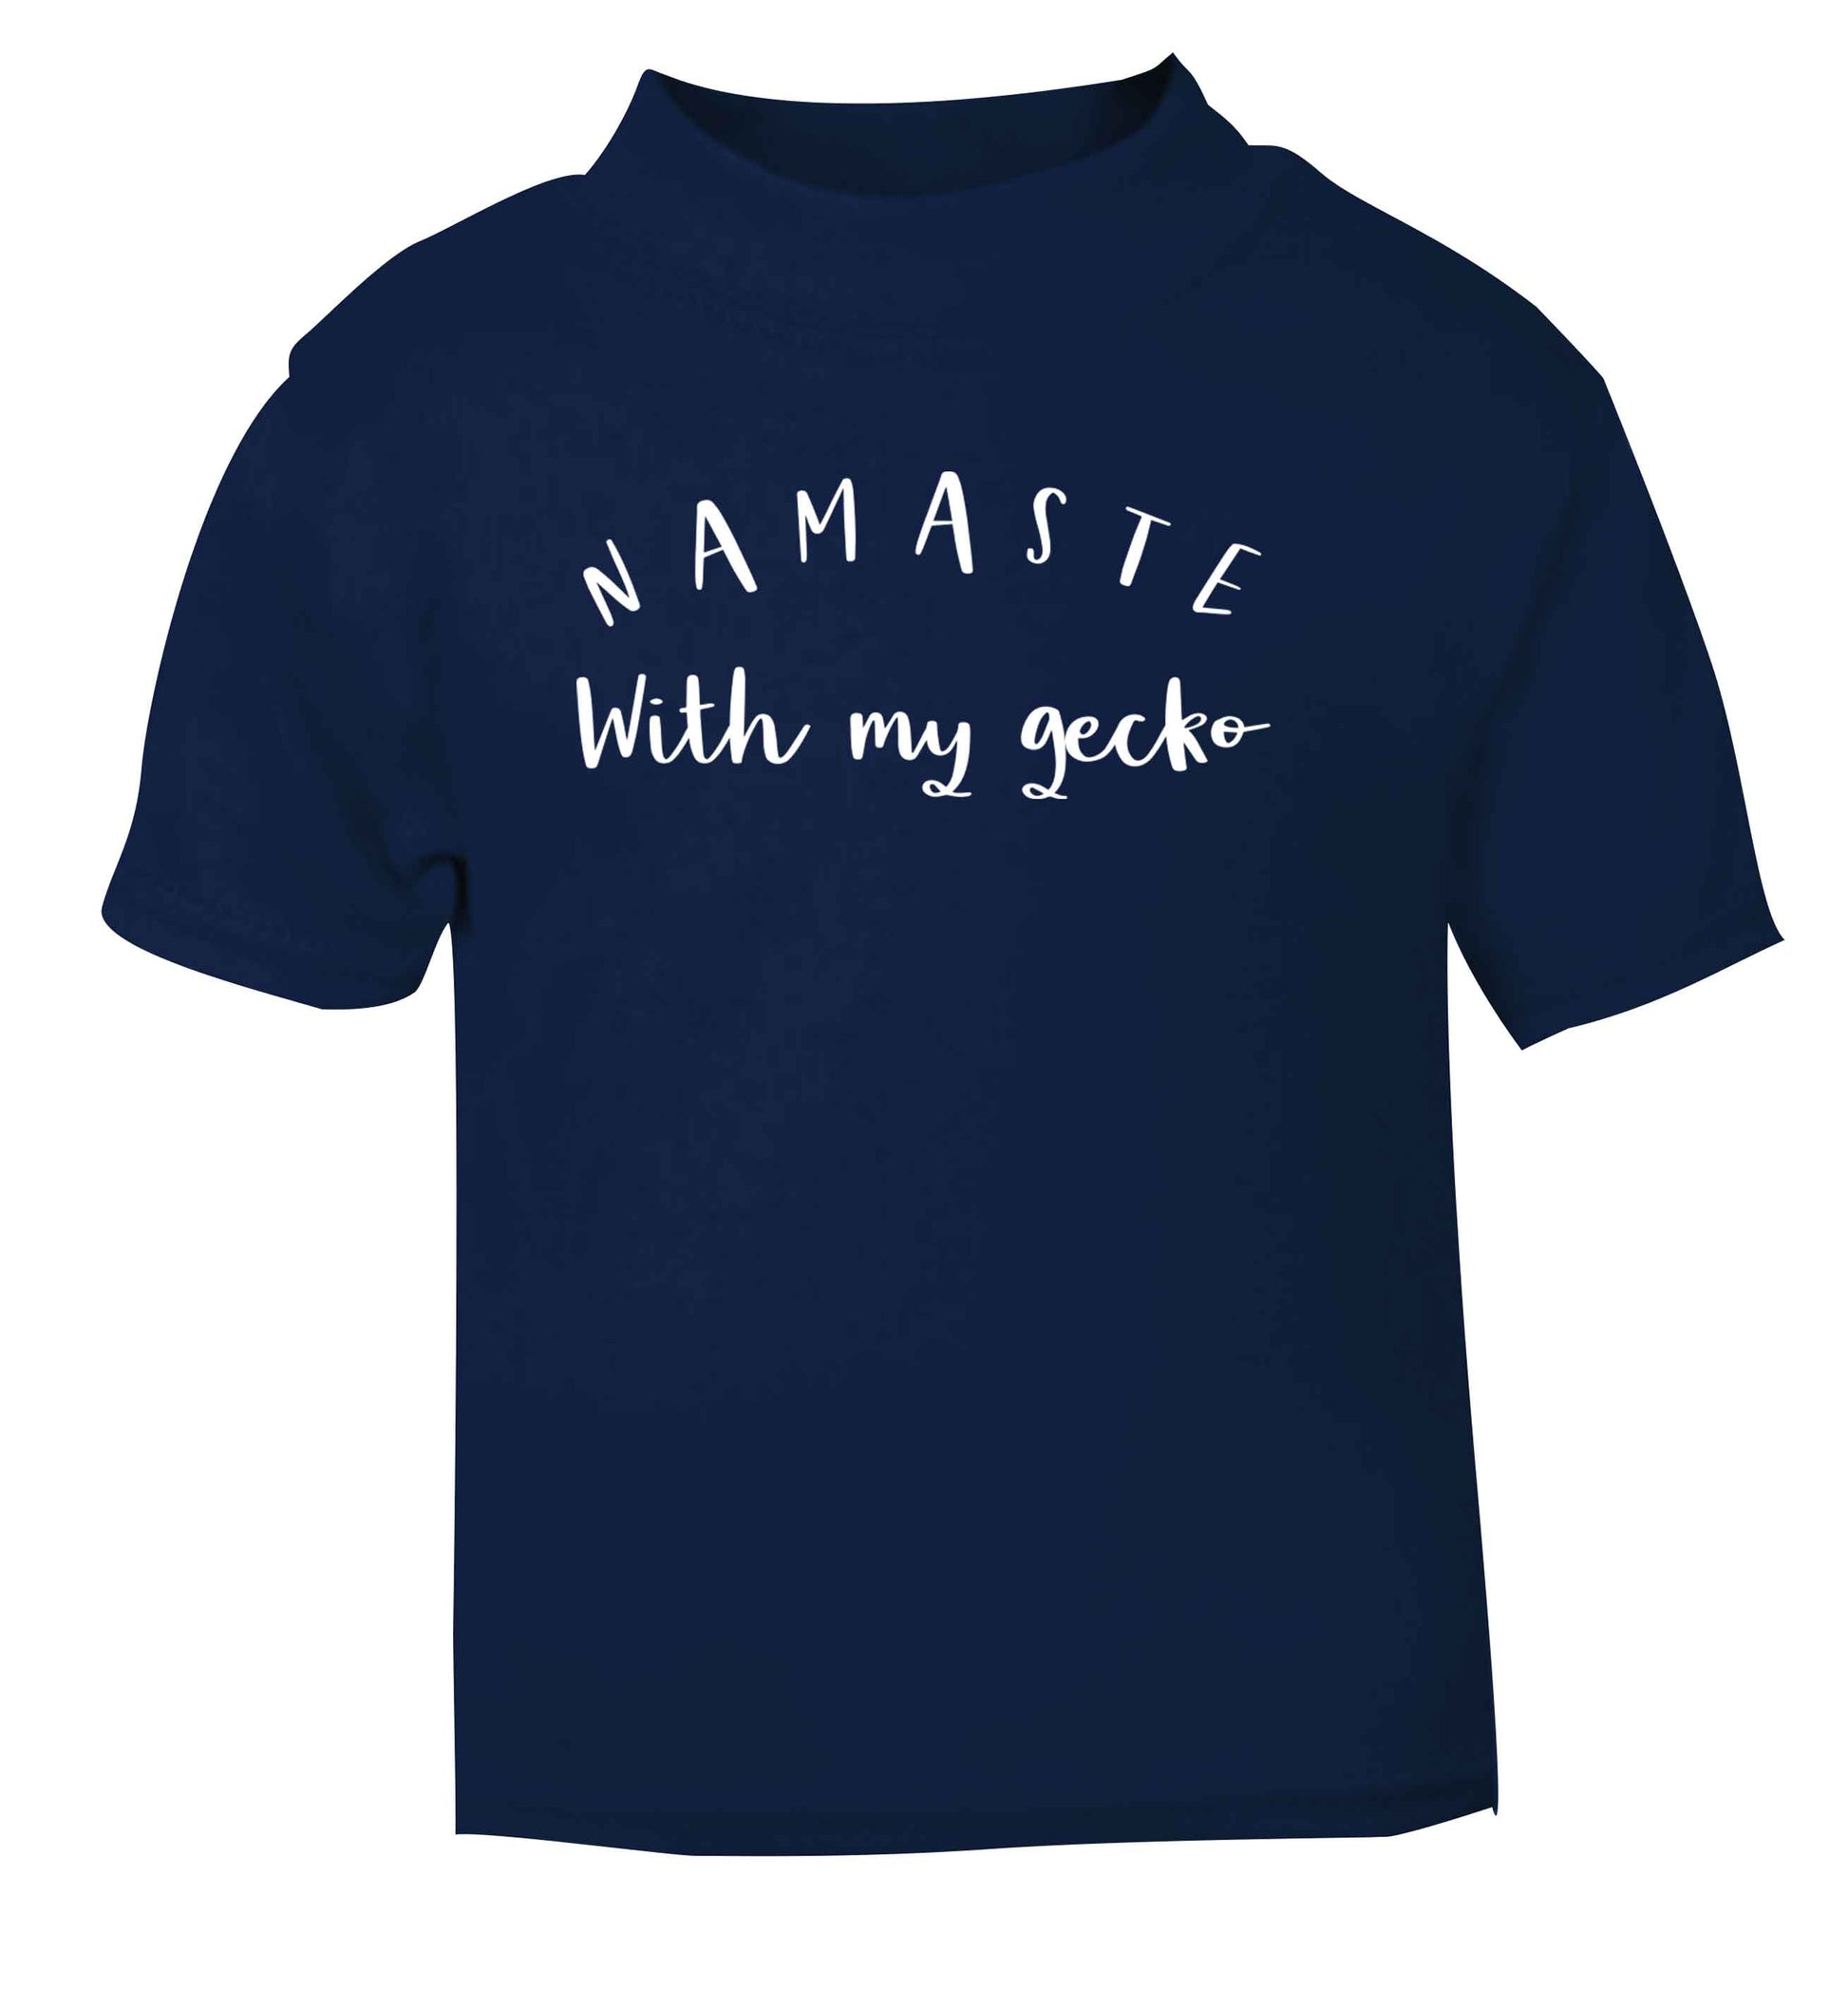 Namaste with my gecko navy Baby Toddler Tshirt 2 Years